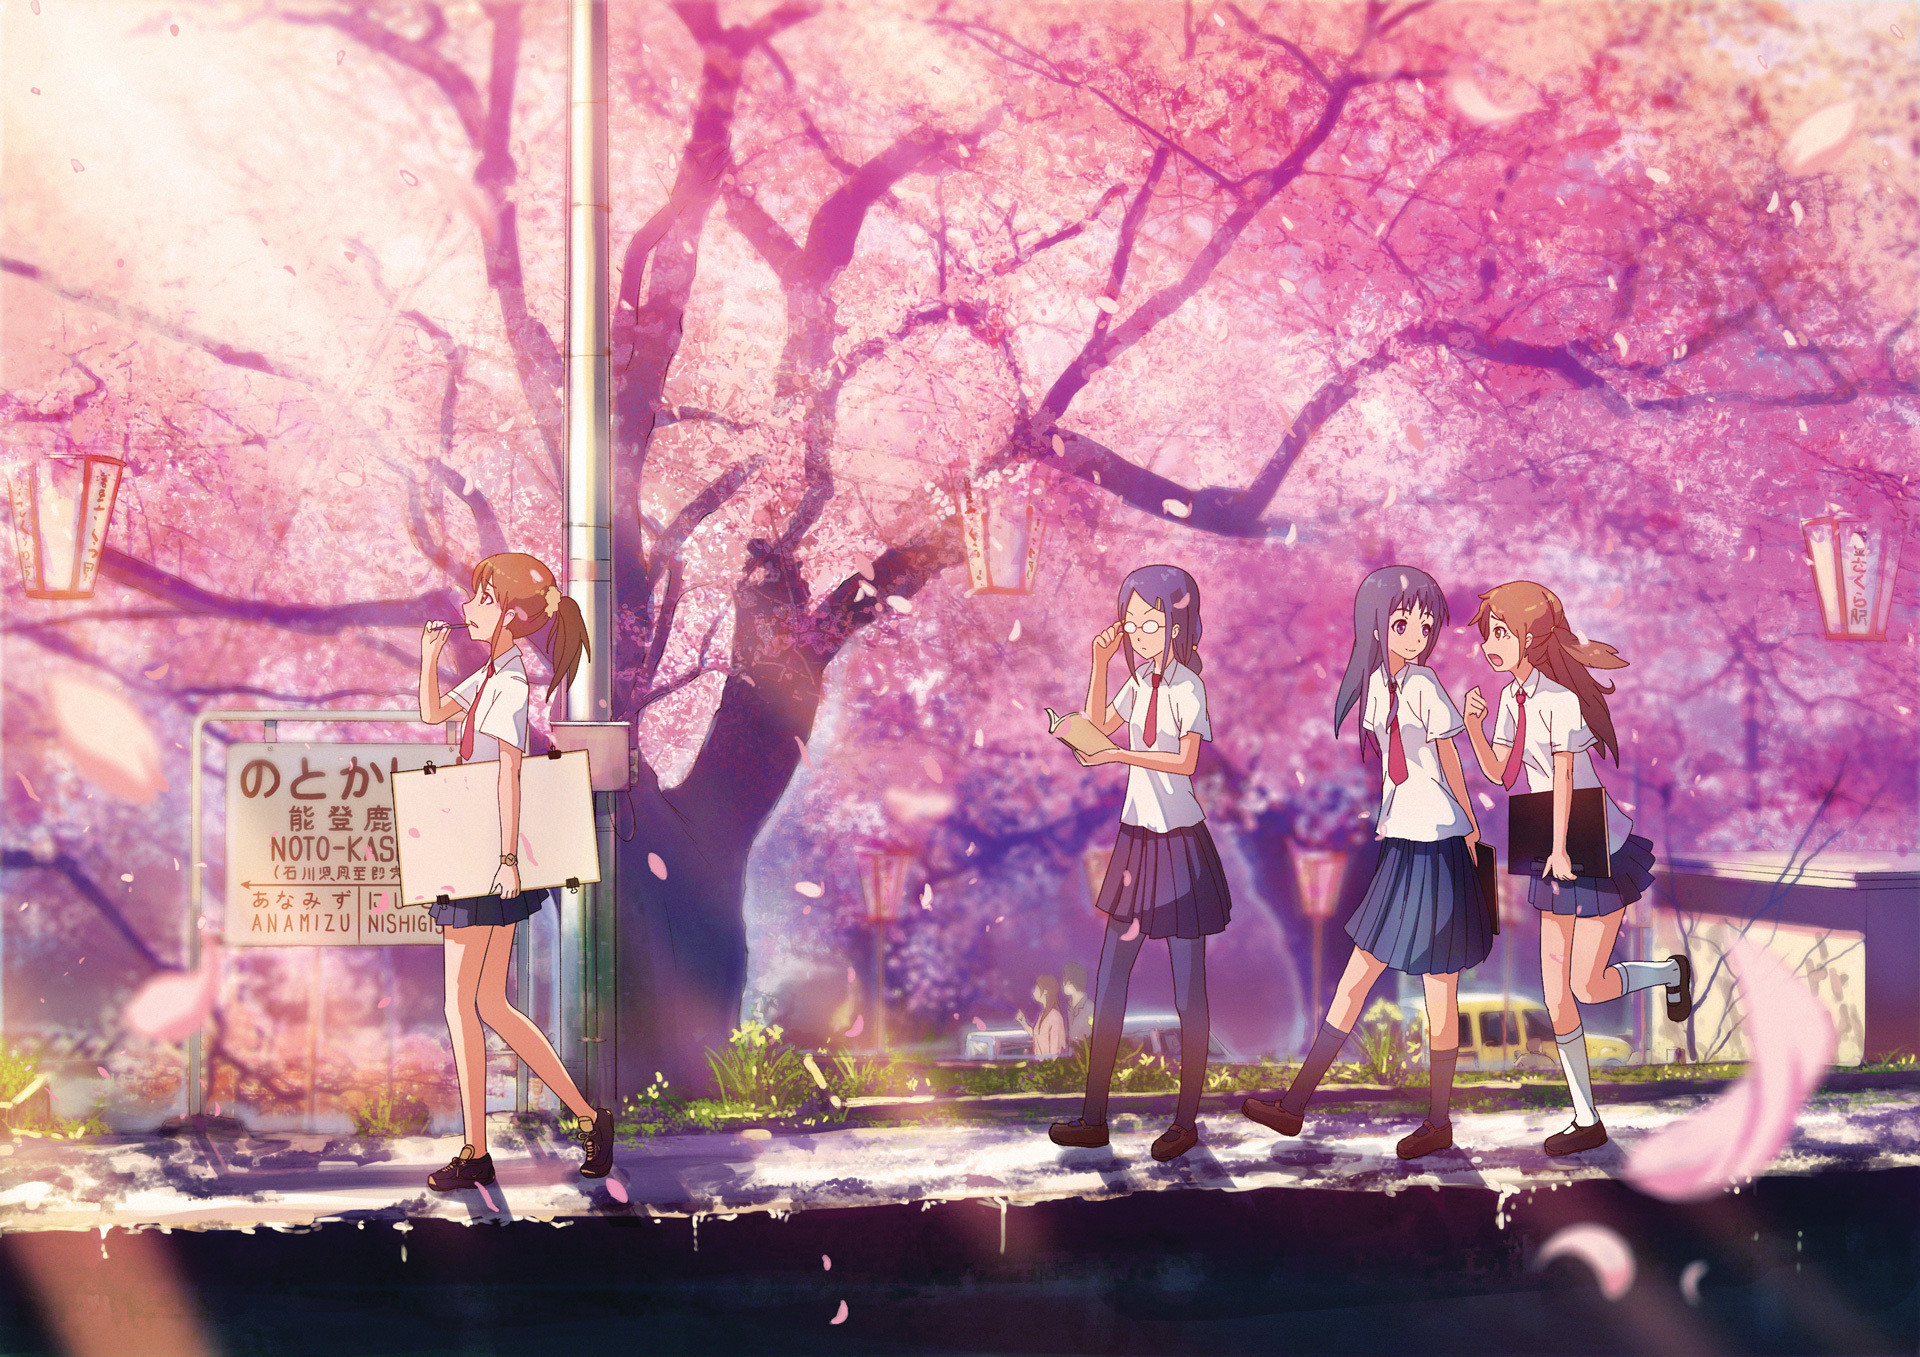 1920x1357 Anime Scenery wallpaper | Anime Landscape | Pinterest | Anime scenery,  Scenery and Anime